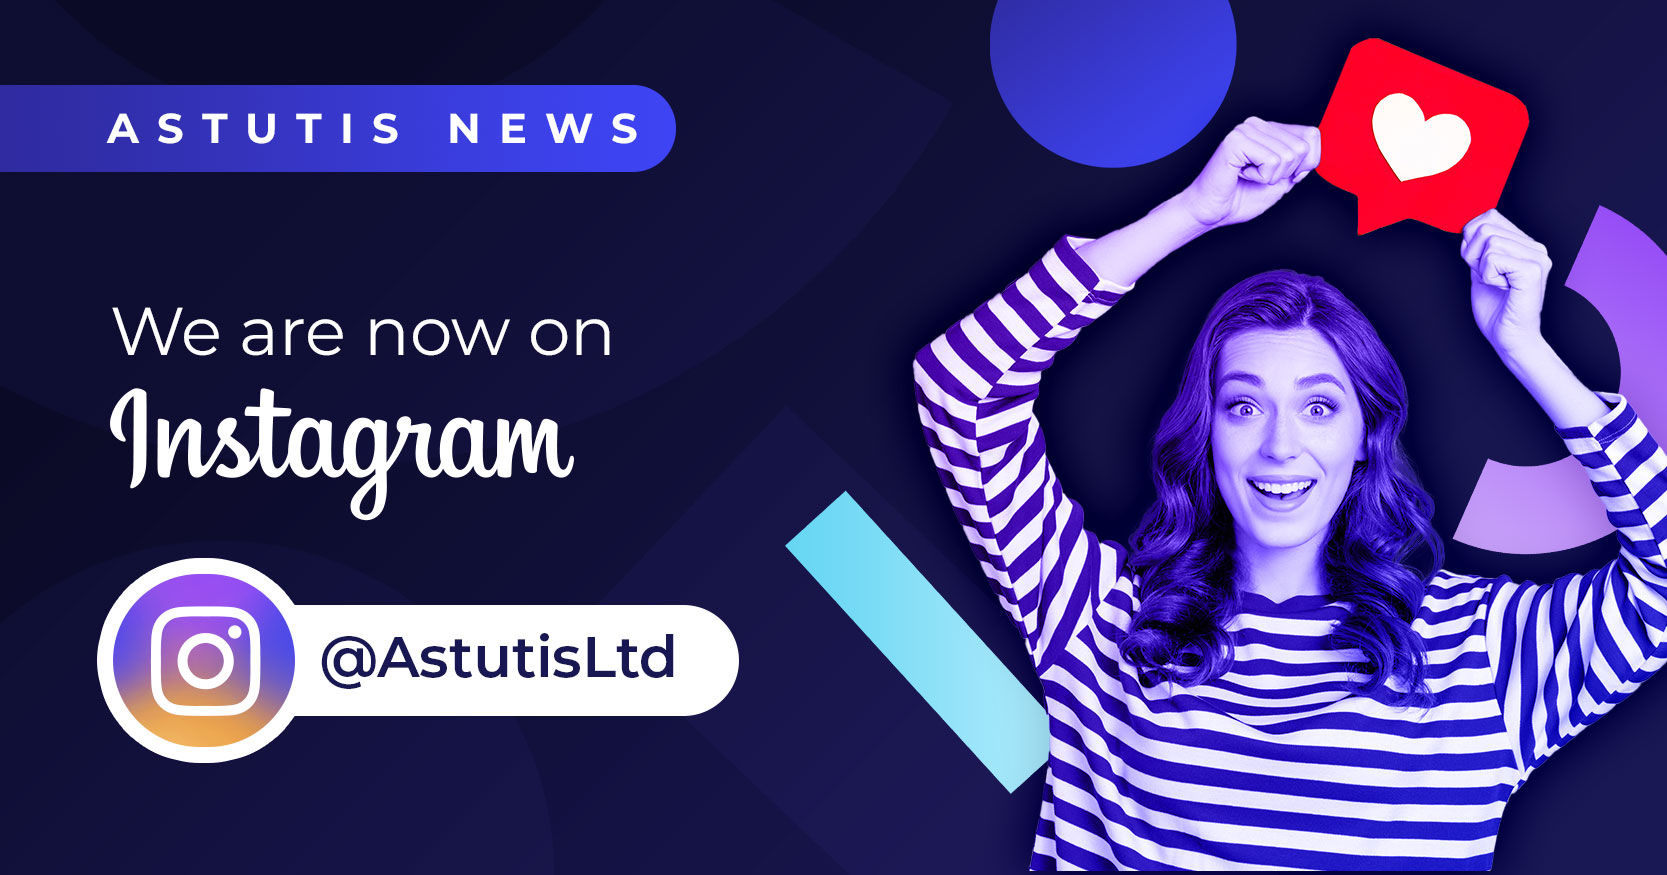 Astutis Join Instagram Image